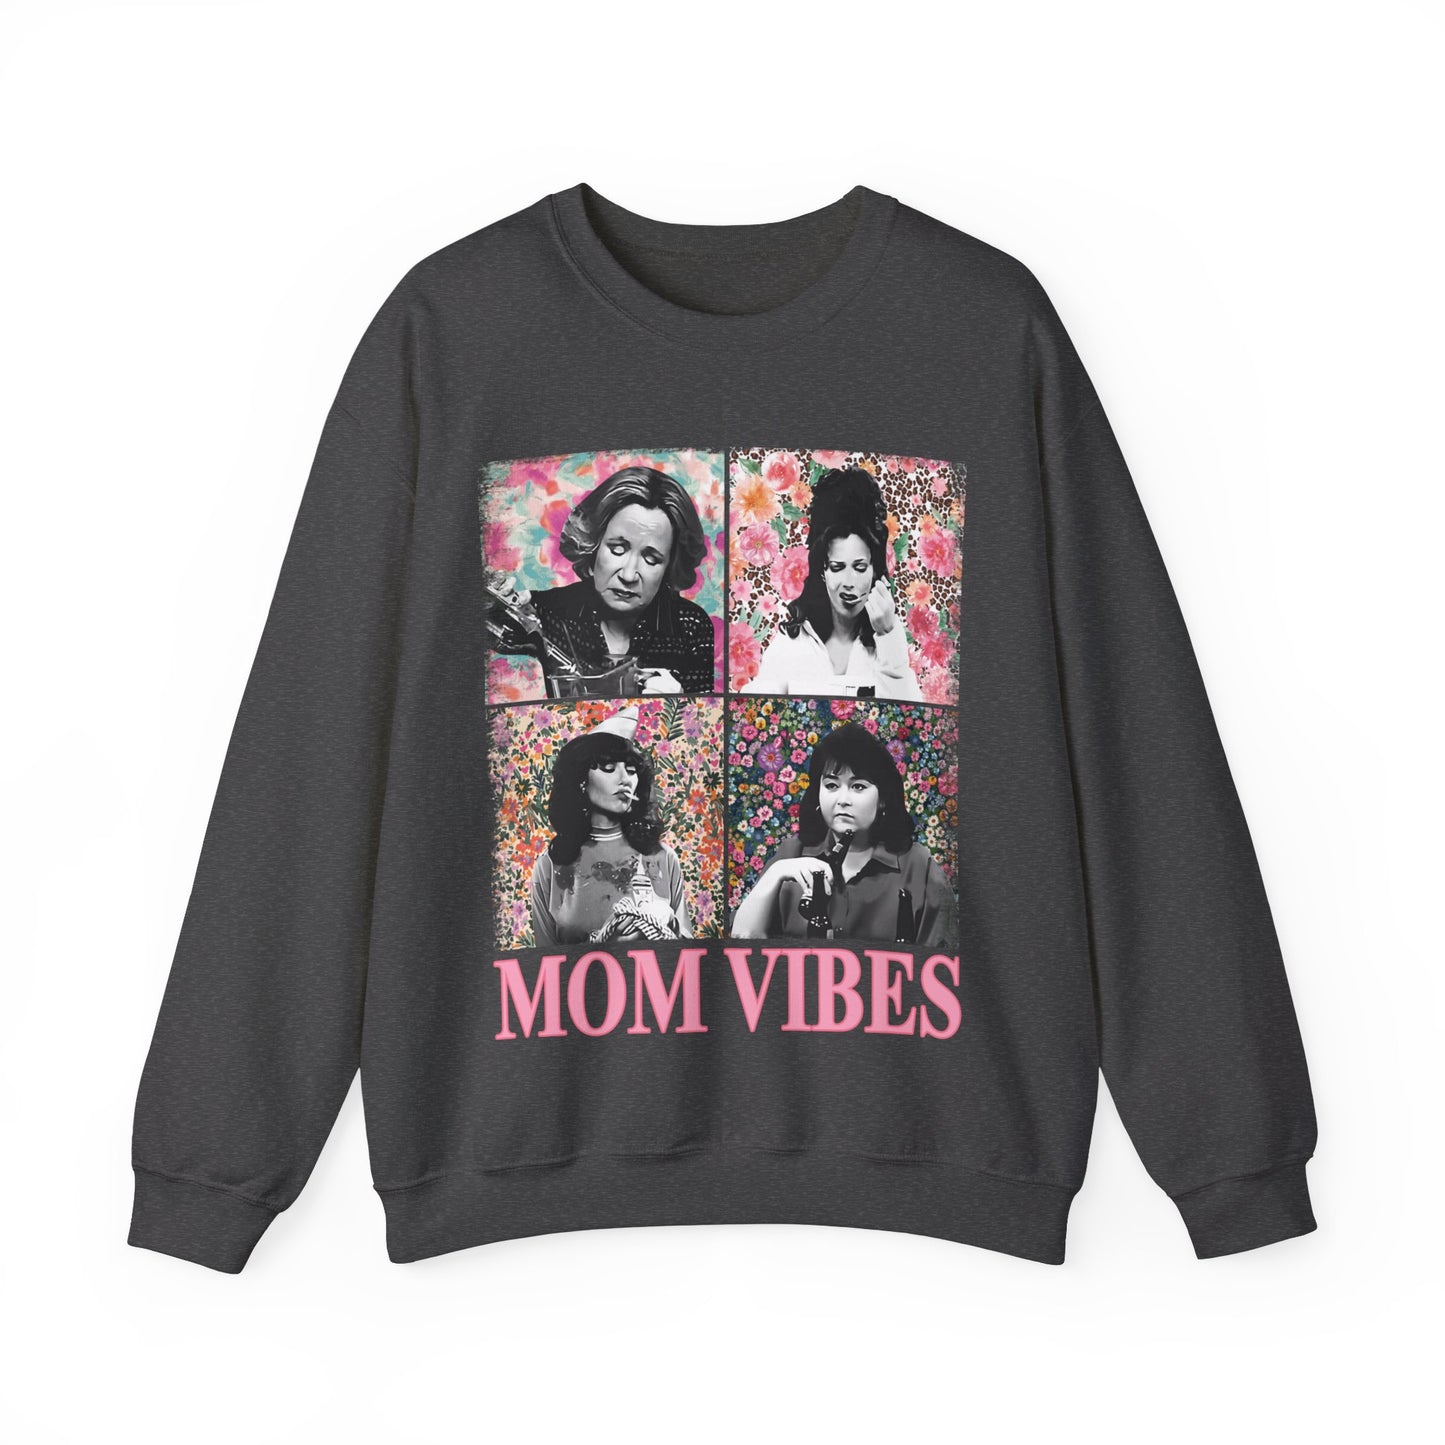 Mom Vibes - Crewneck Sweatshirt